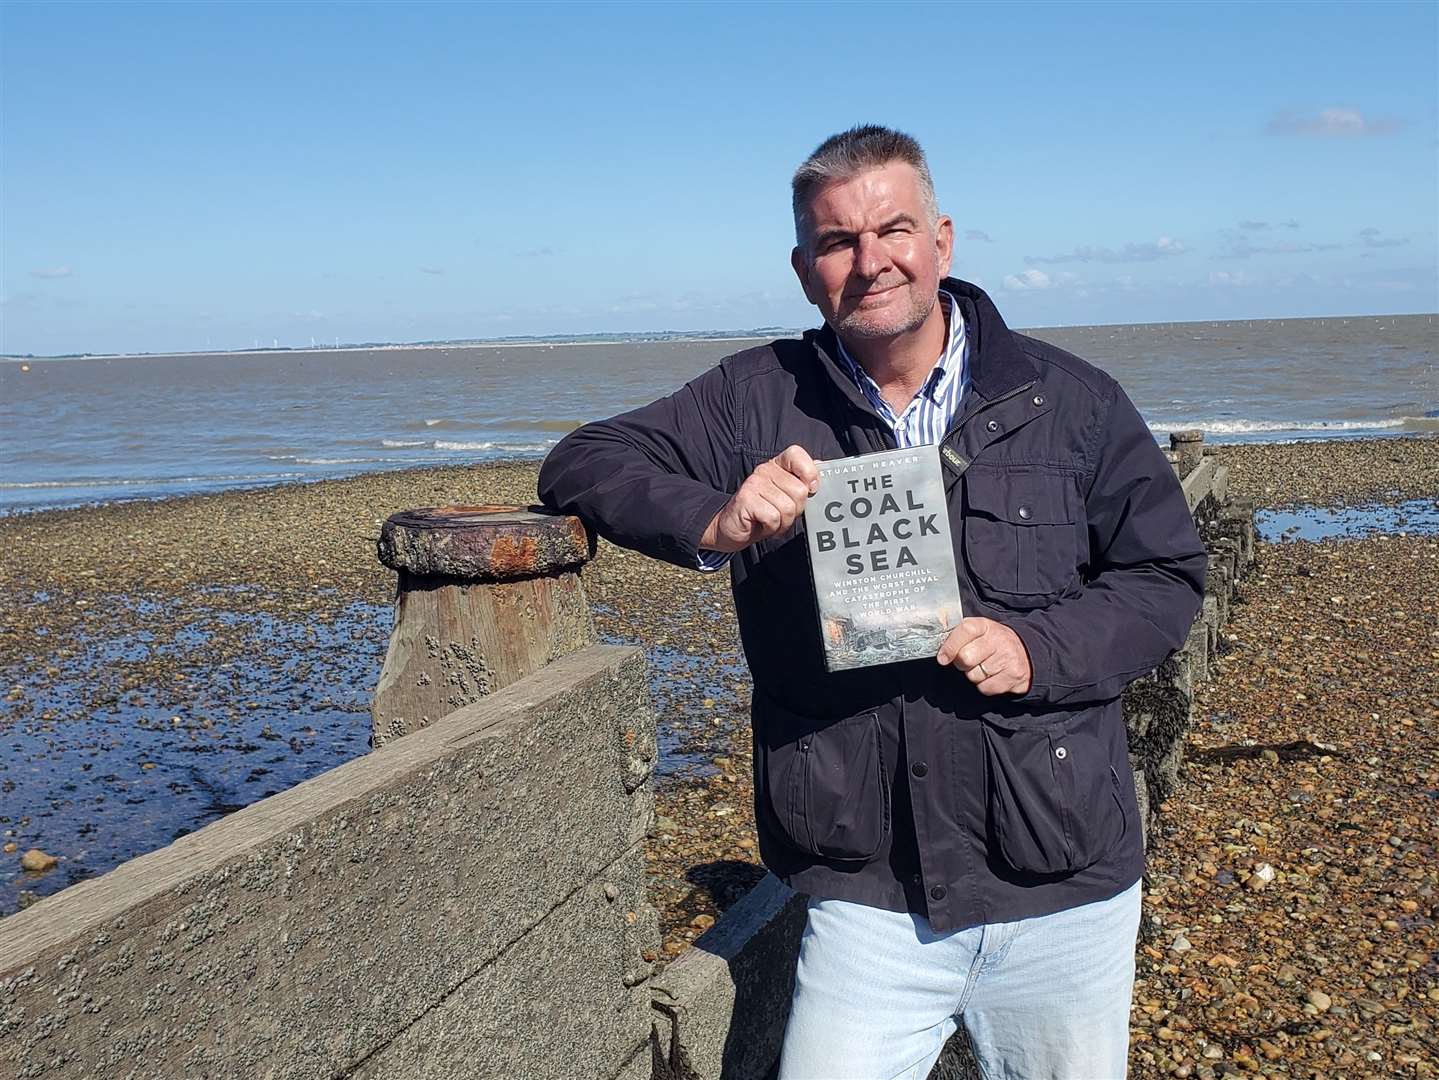 Author Stuart Heaver with his new book, The Coal Black Sea